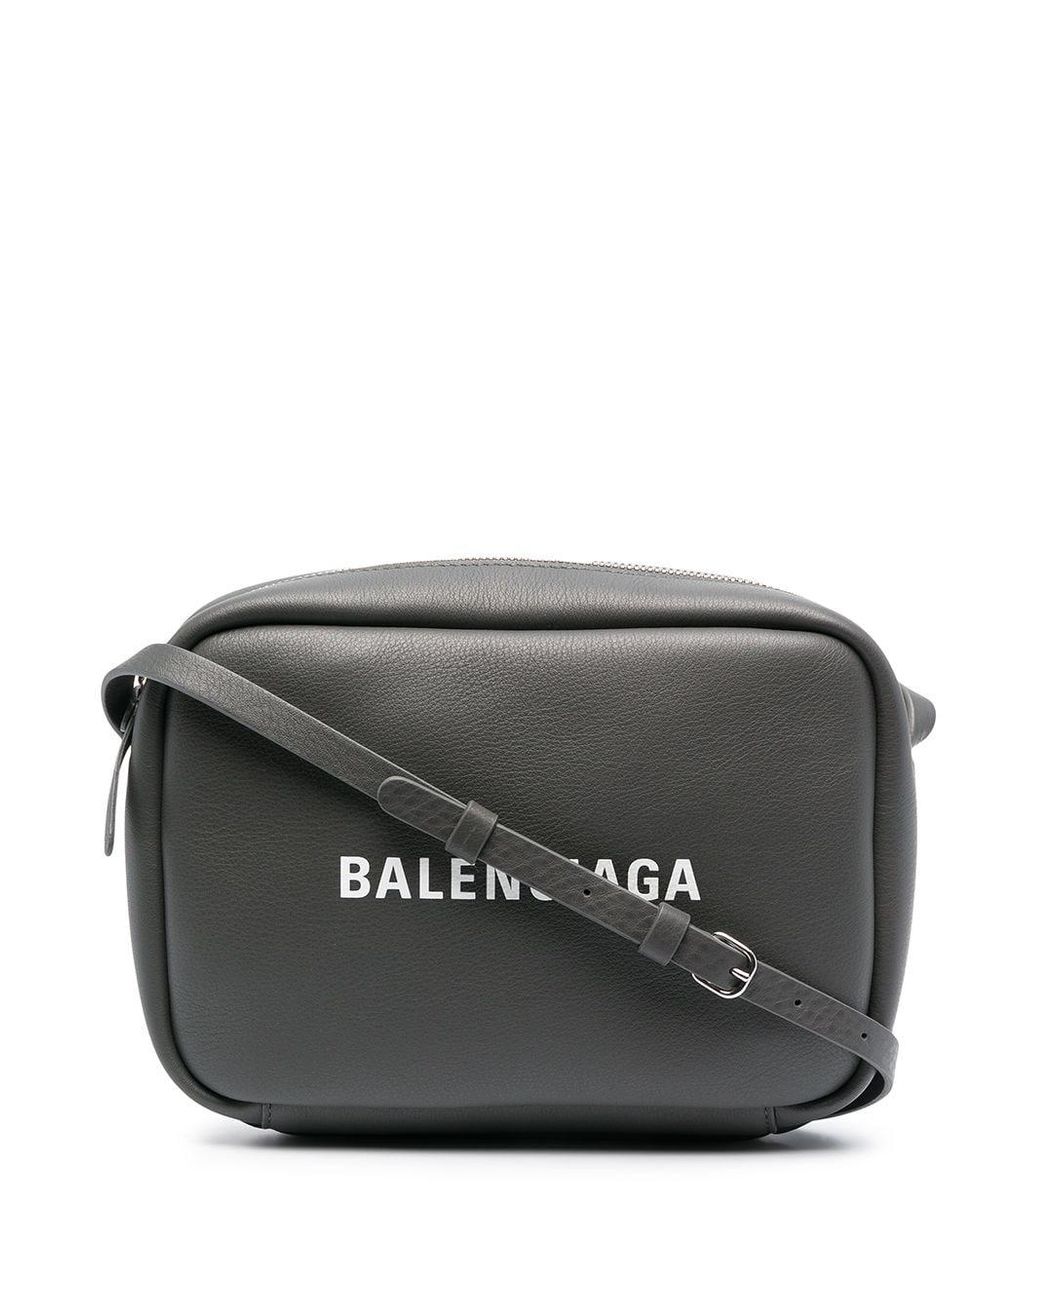 Balenciaga Leather Small Everyday Camera Bag in Grey (Gray) - Lyst